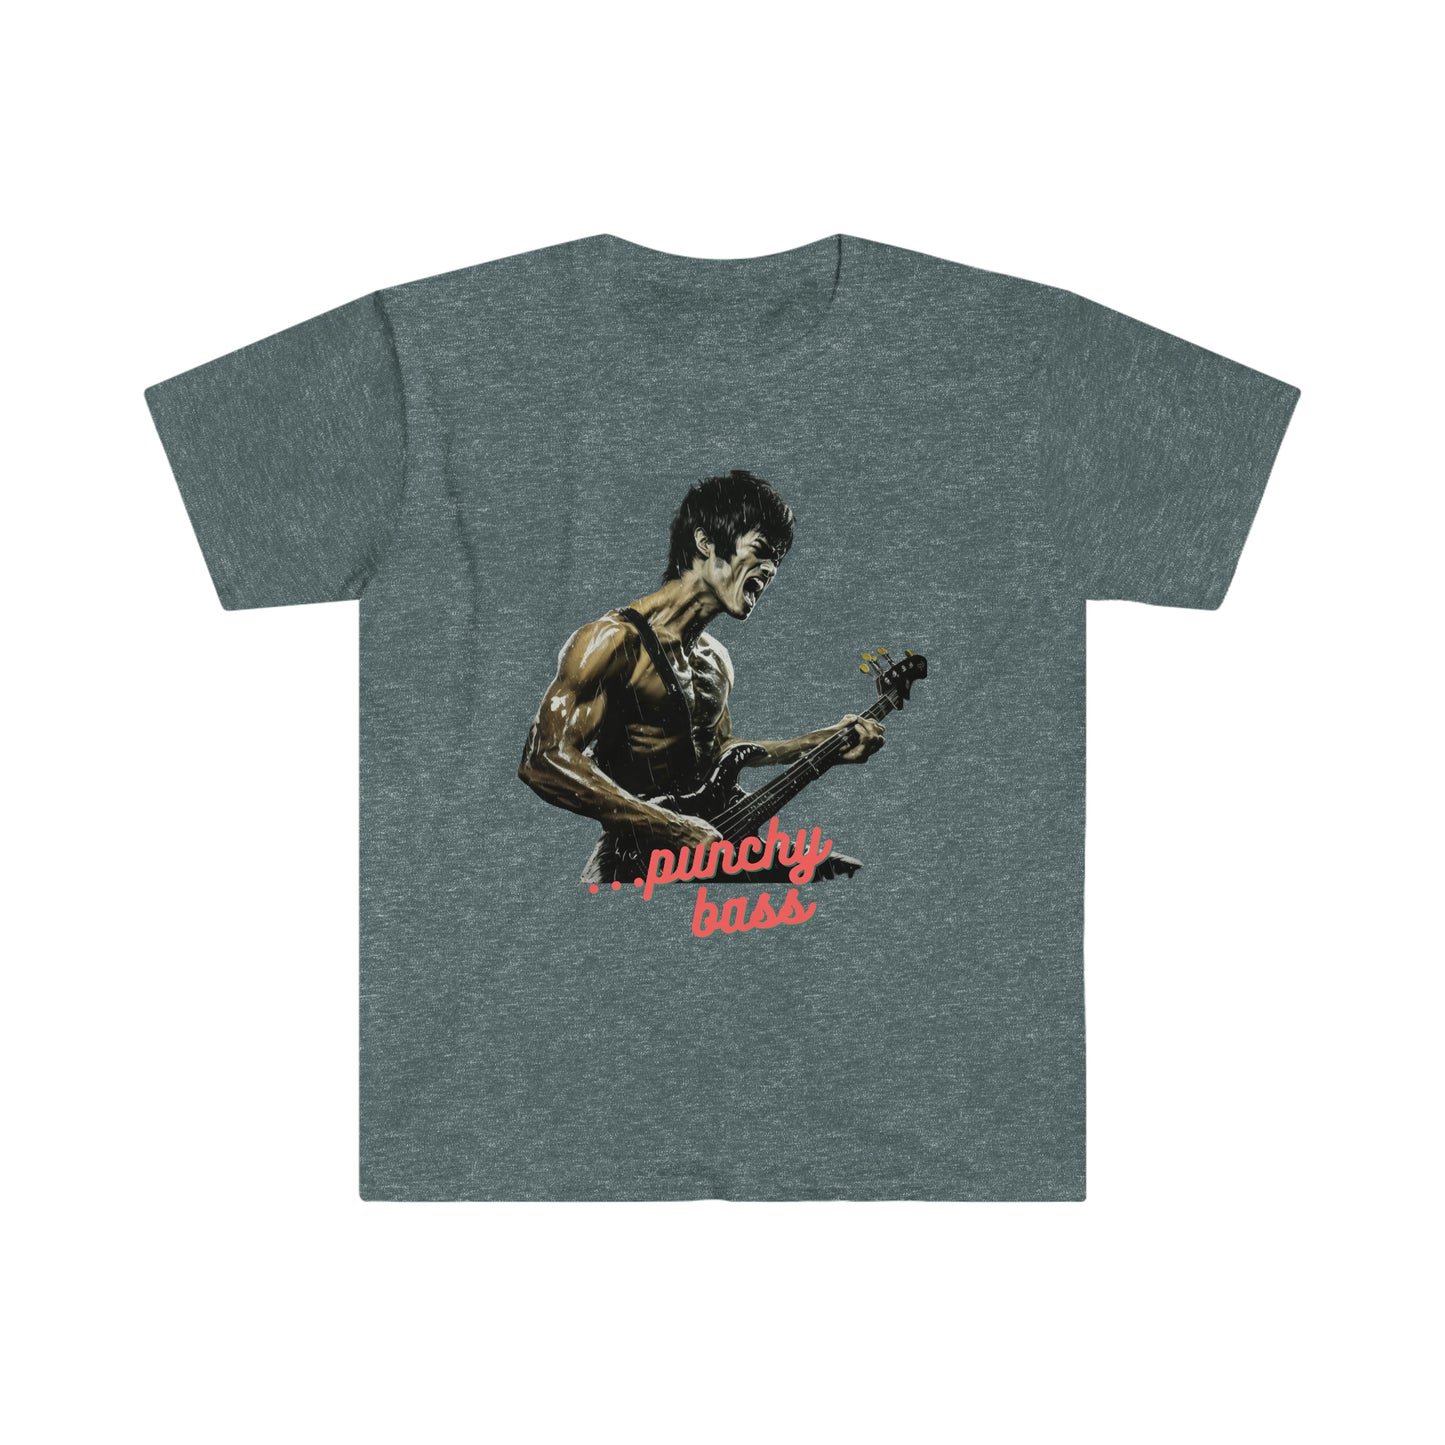 Men's Punchy Bass Softstyle T-Shirt